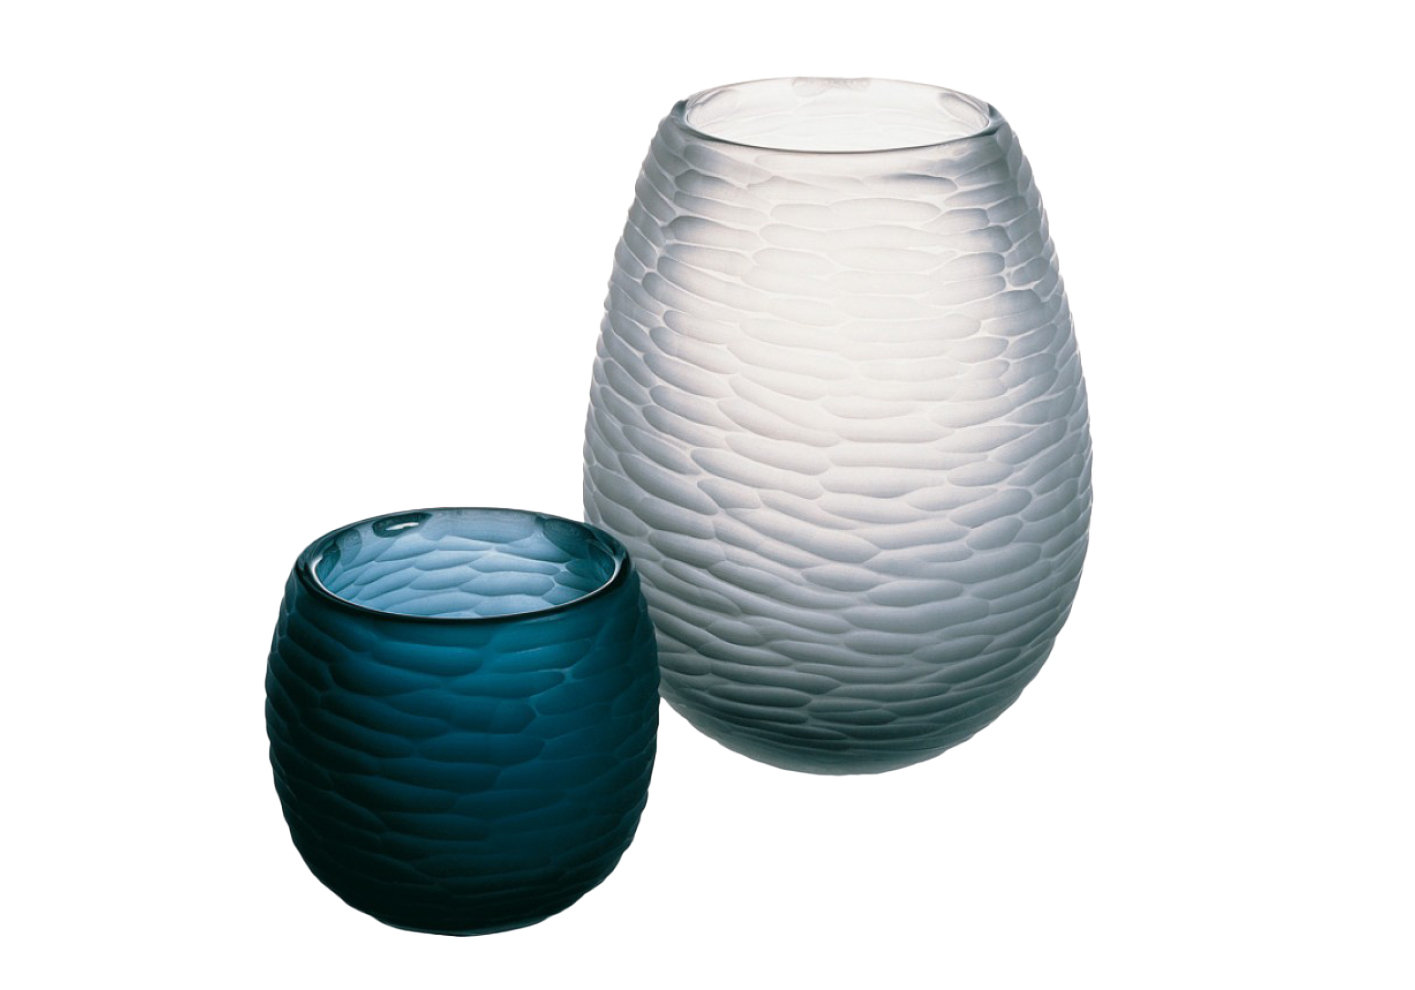 Armani/Casa Alcazar Medium vase